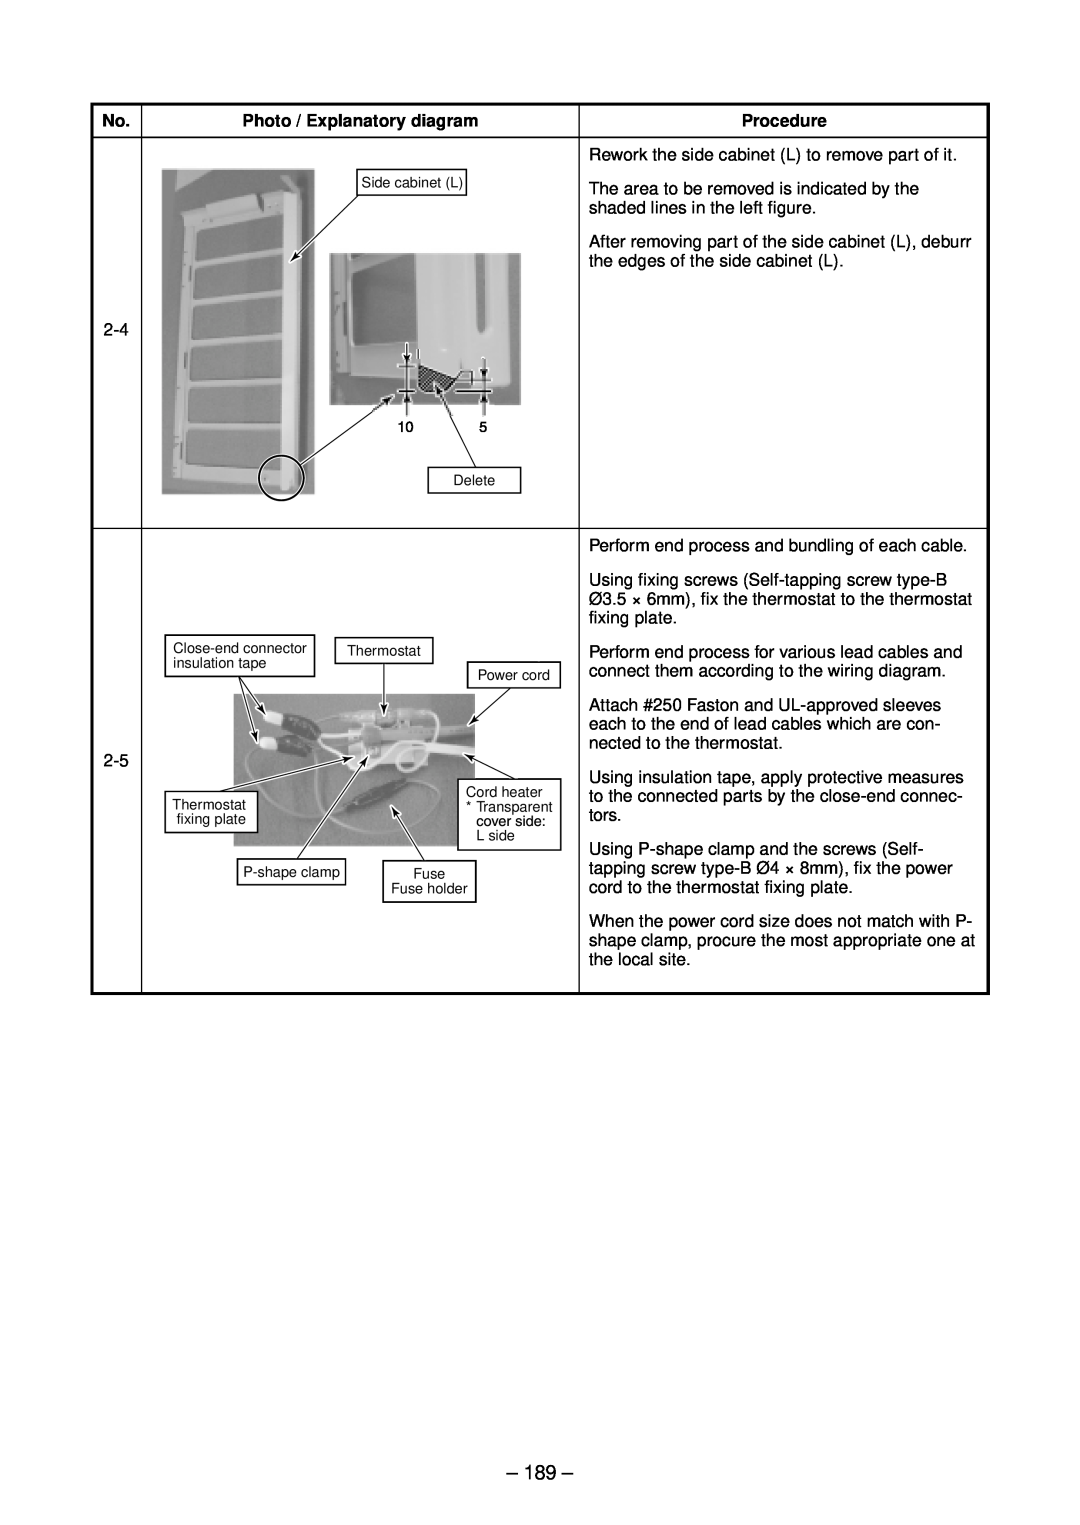 Toshiba RAV-SM803UT-E service manual Photo / Explanatory diagram, Procedure, Rework the side cabinet L to remove part of it 